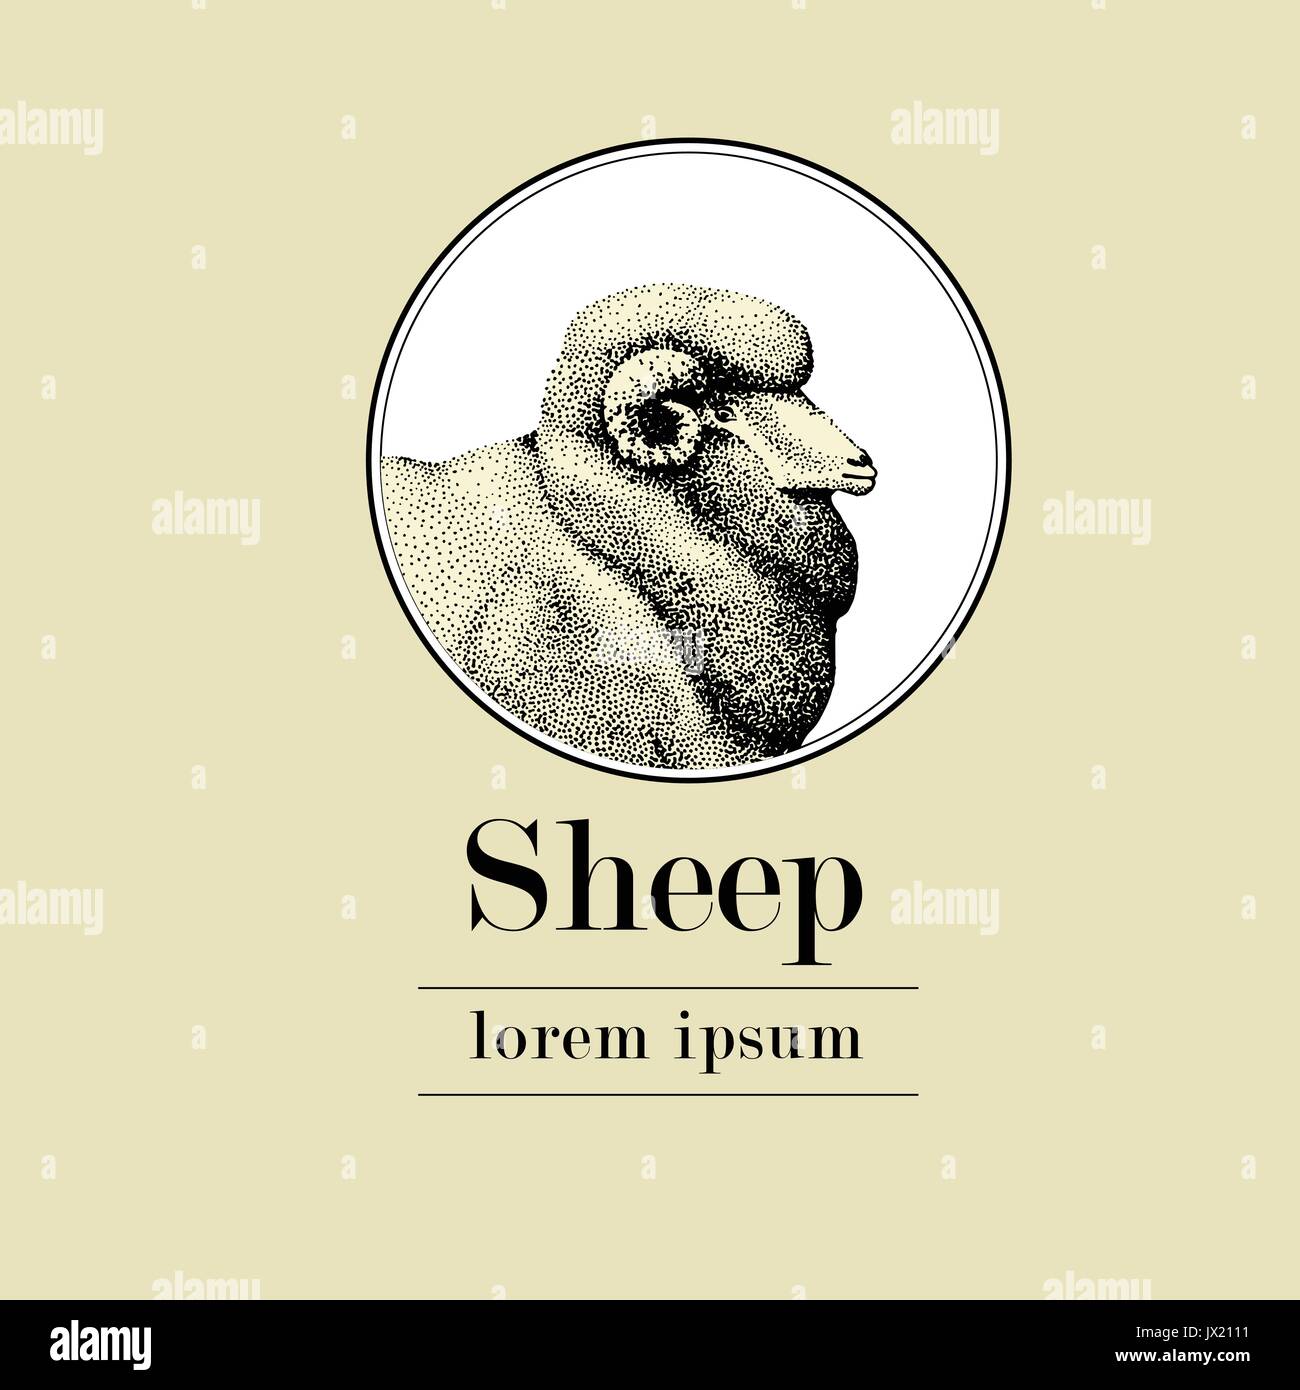 sheep, logo template, vector hand drawn vintage illustration Stock Vector